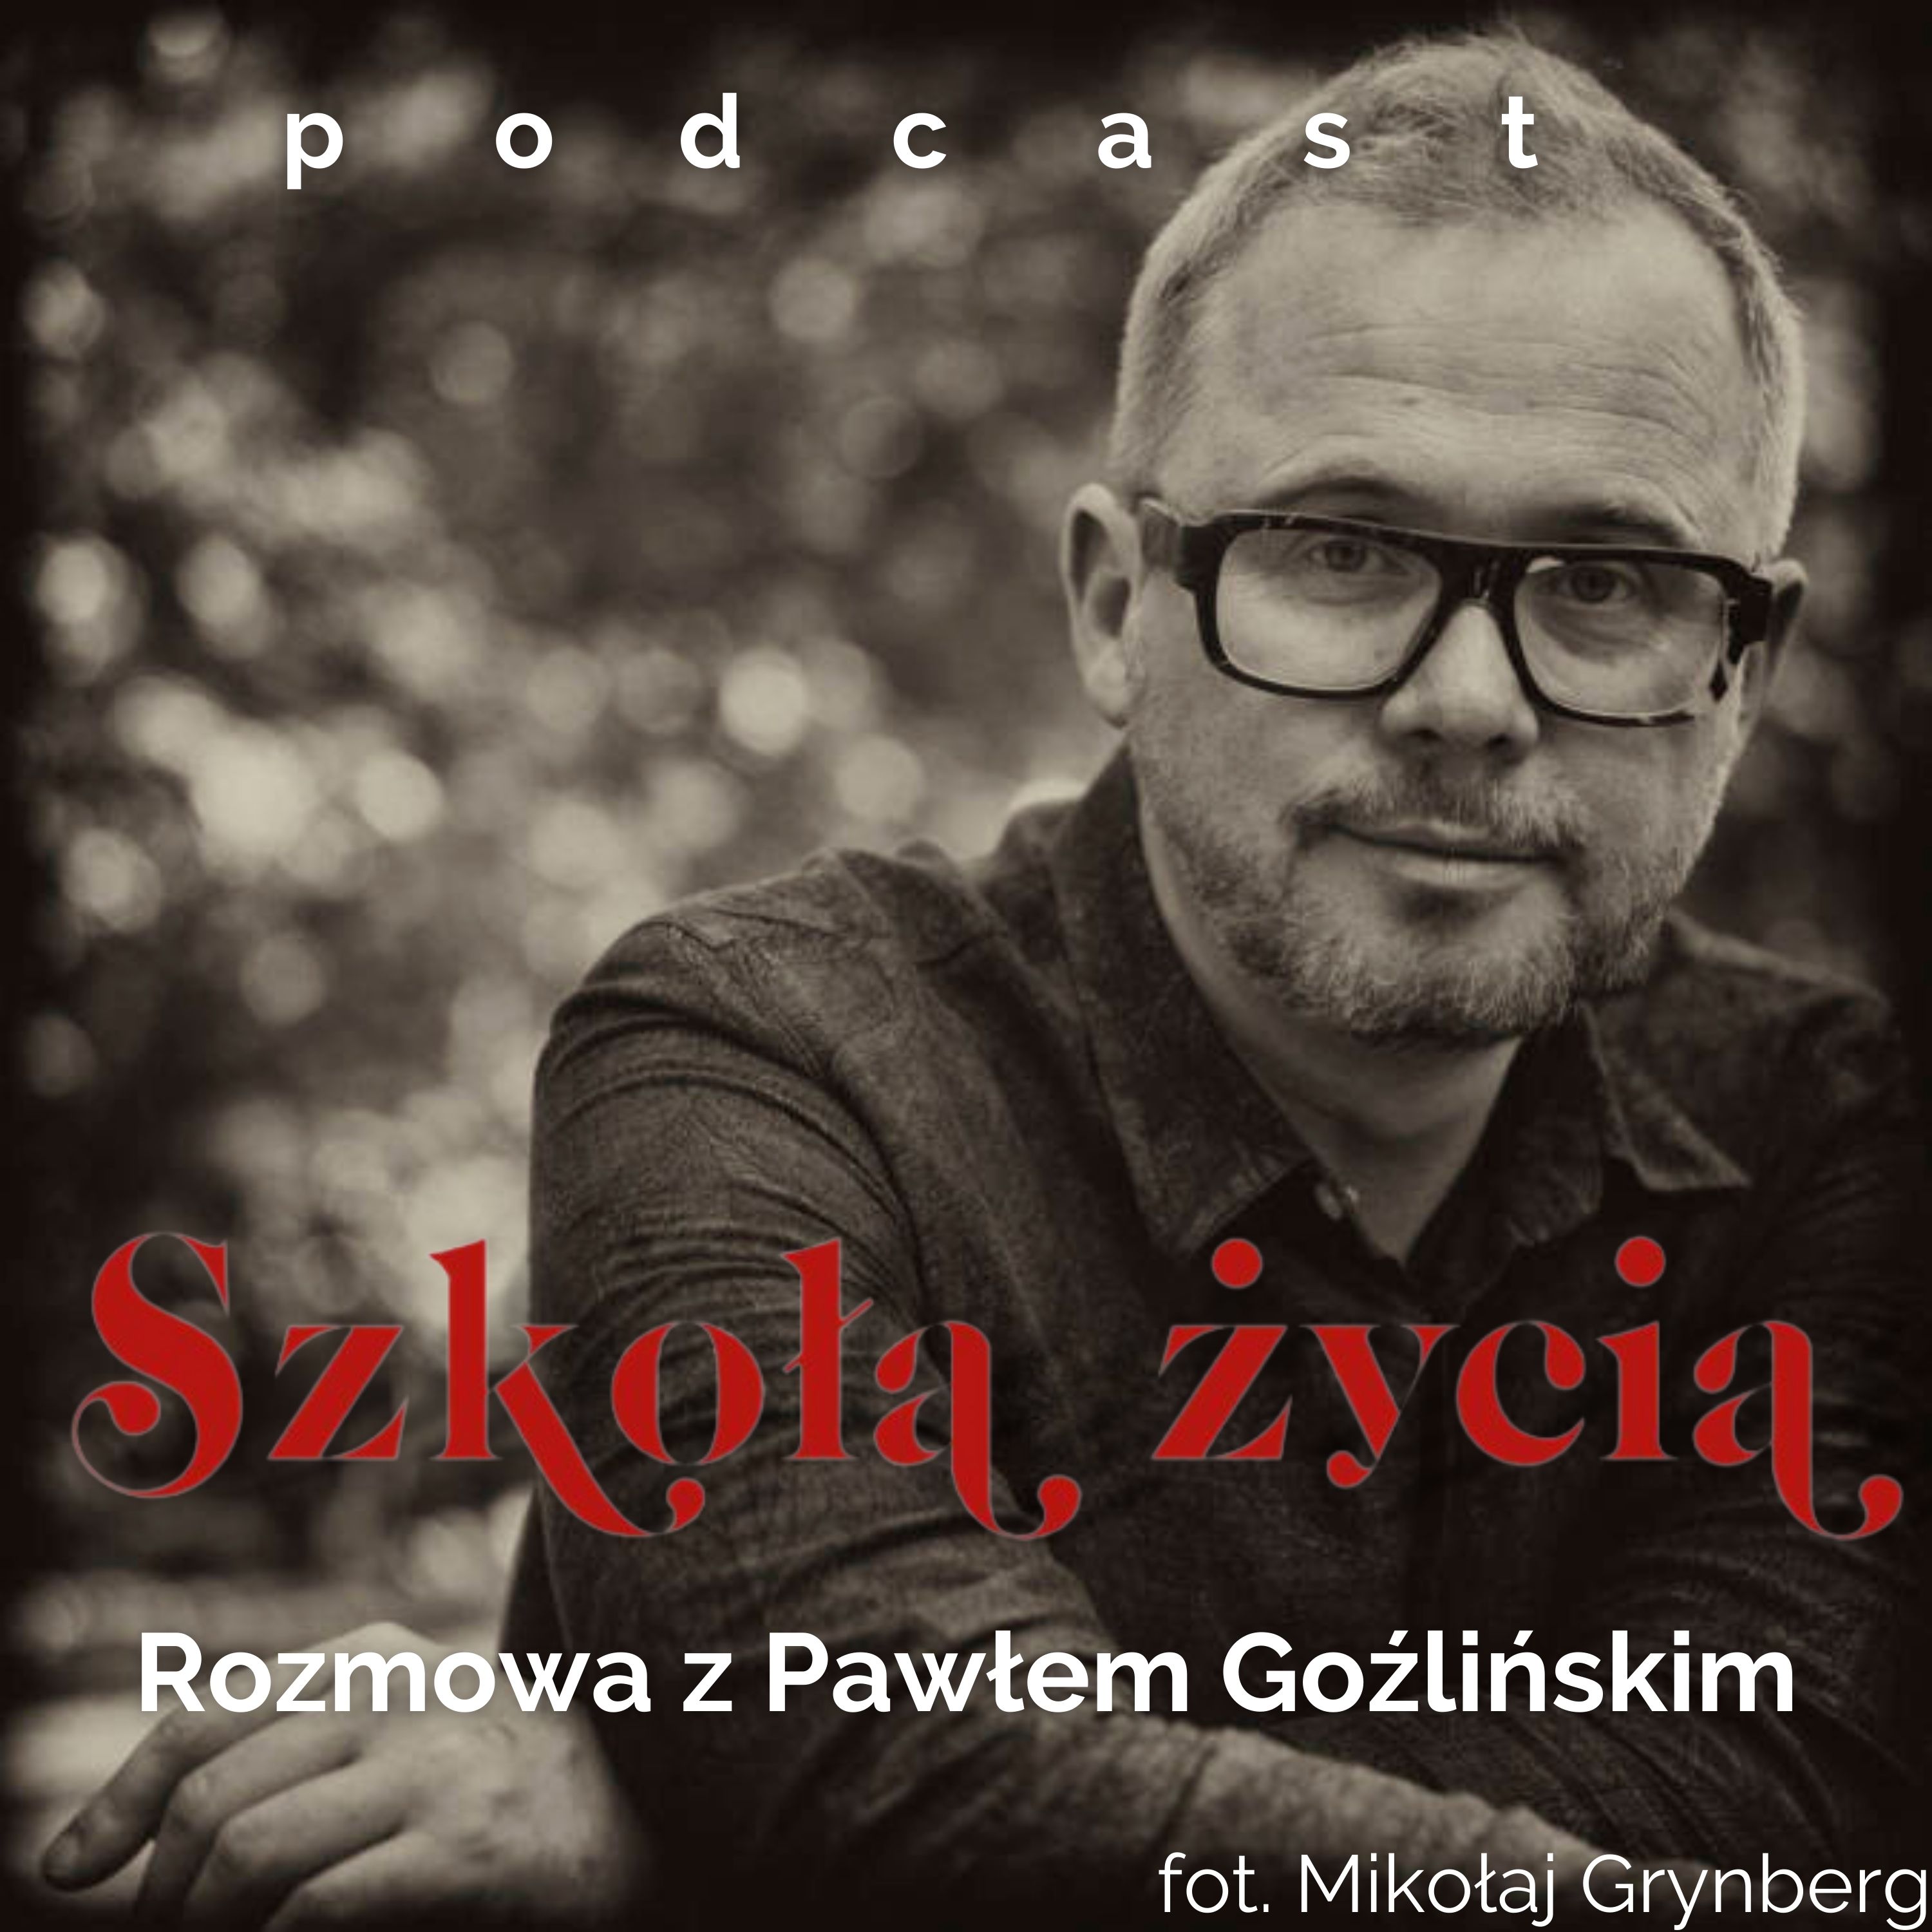 Artwork for podcast SZKOŁA ŻYCIA